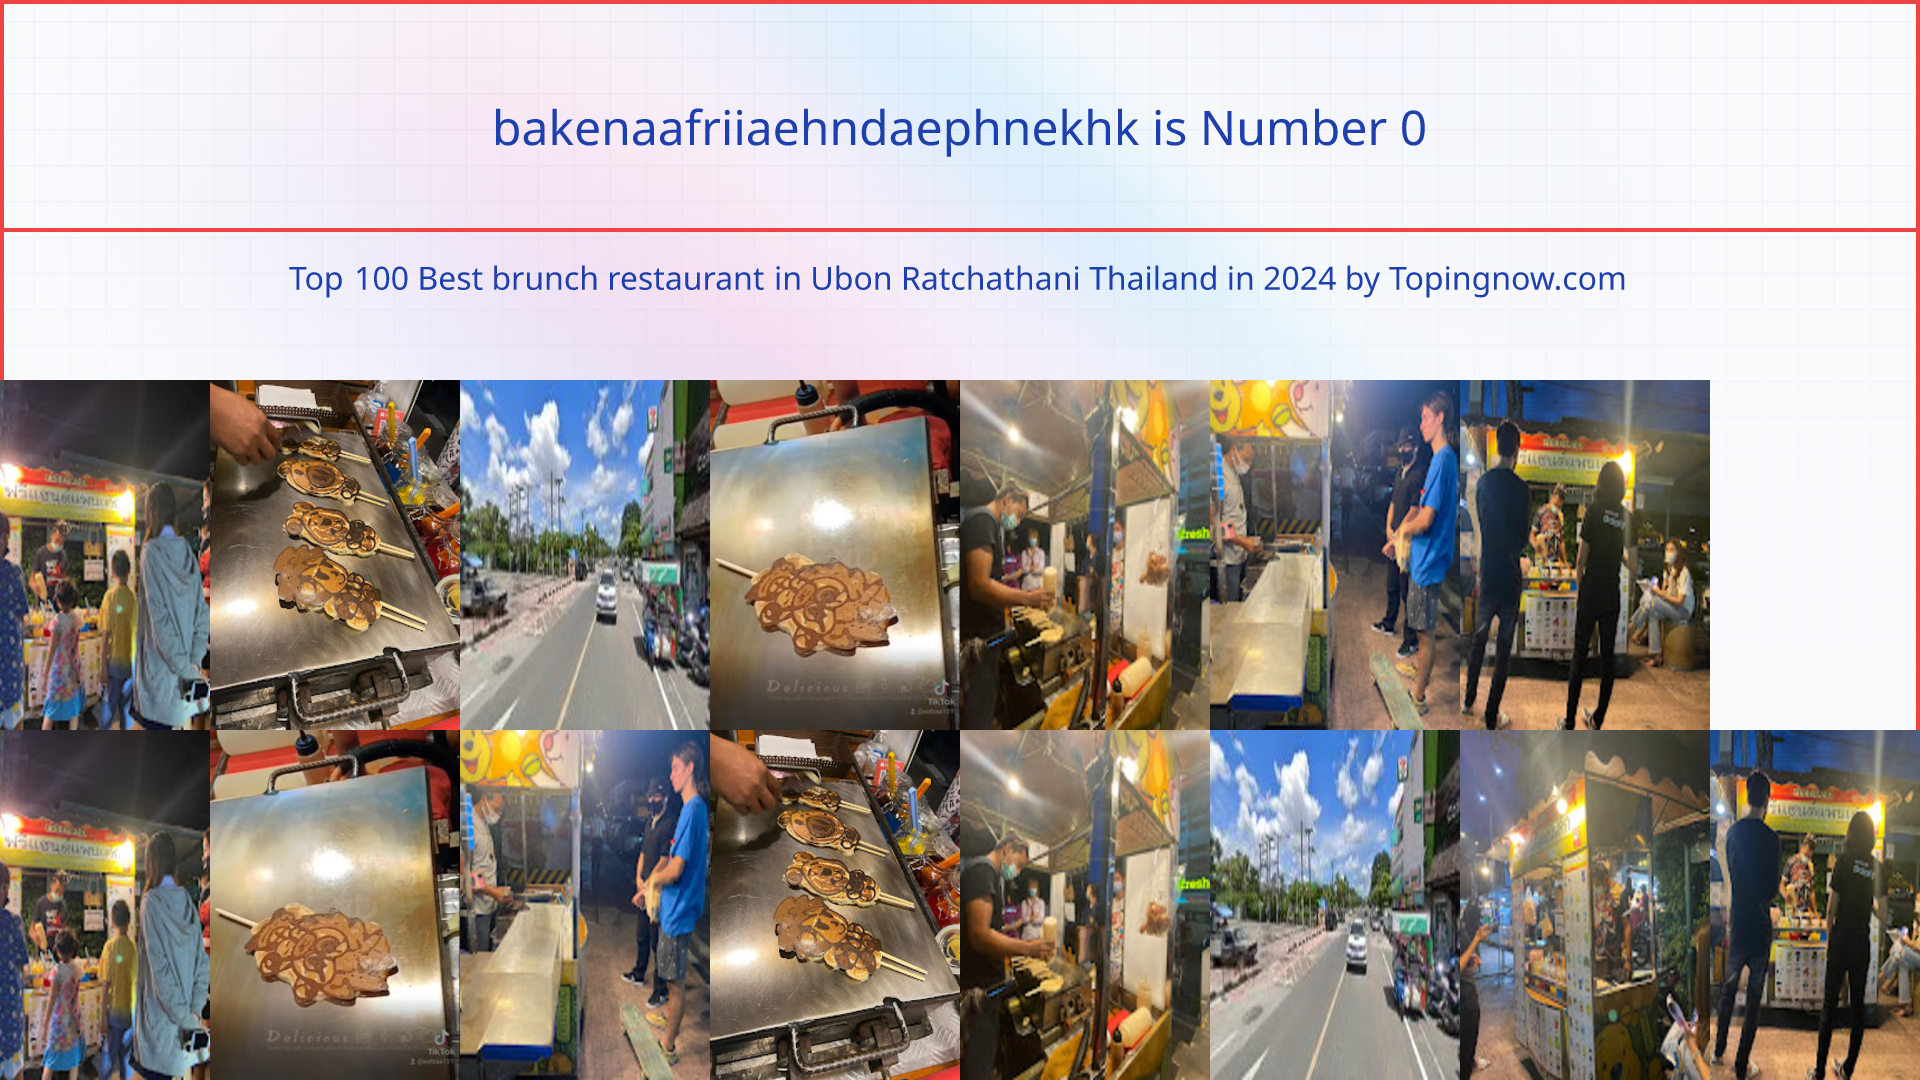 bakenaafriiaehndaephnekhk: Top 100 Best brunch restaurant in Ubon Ratchathani Thailand in 2024